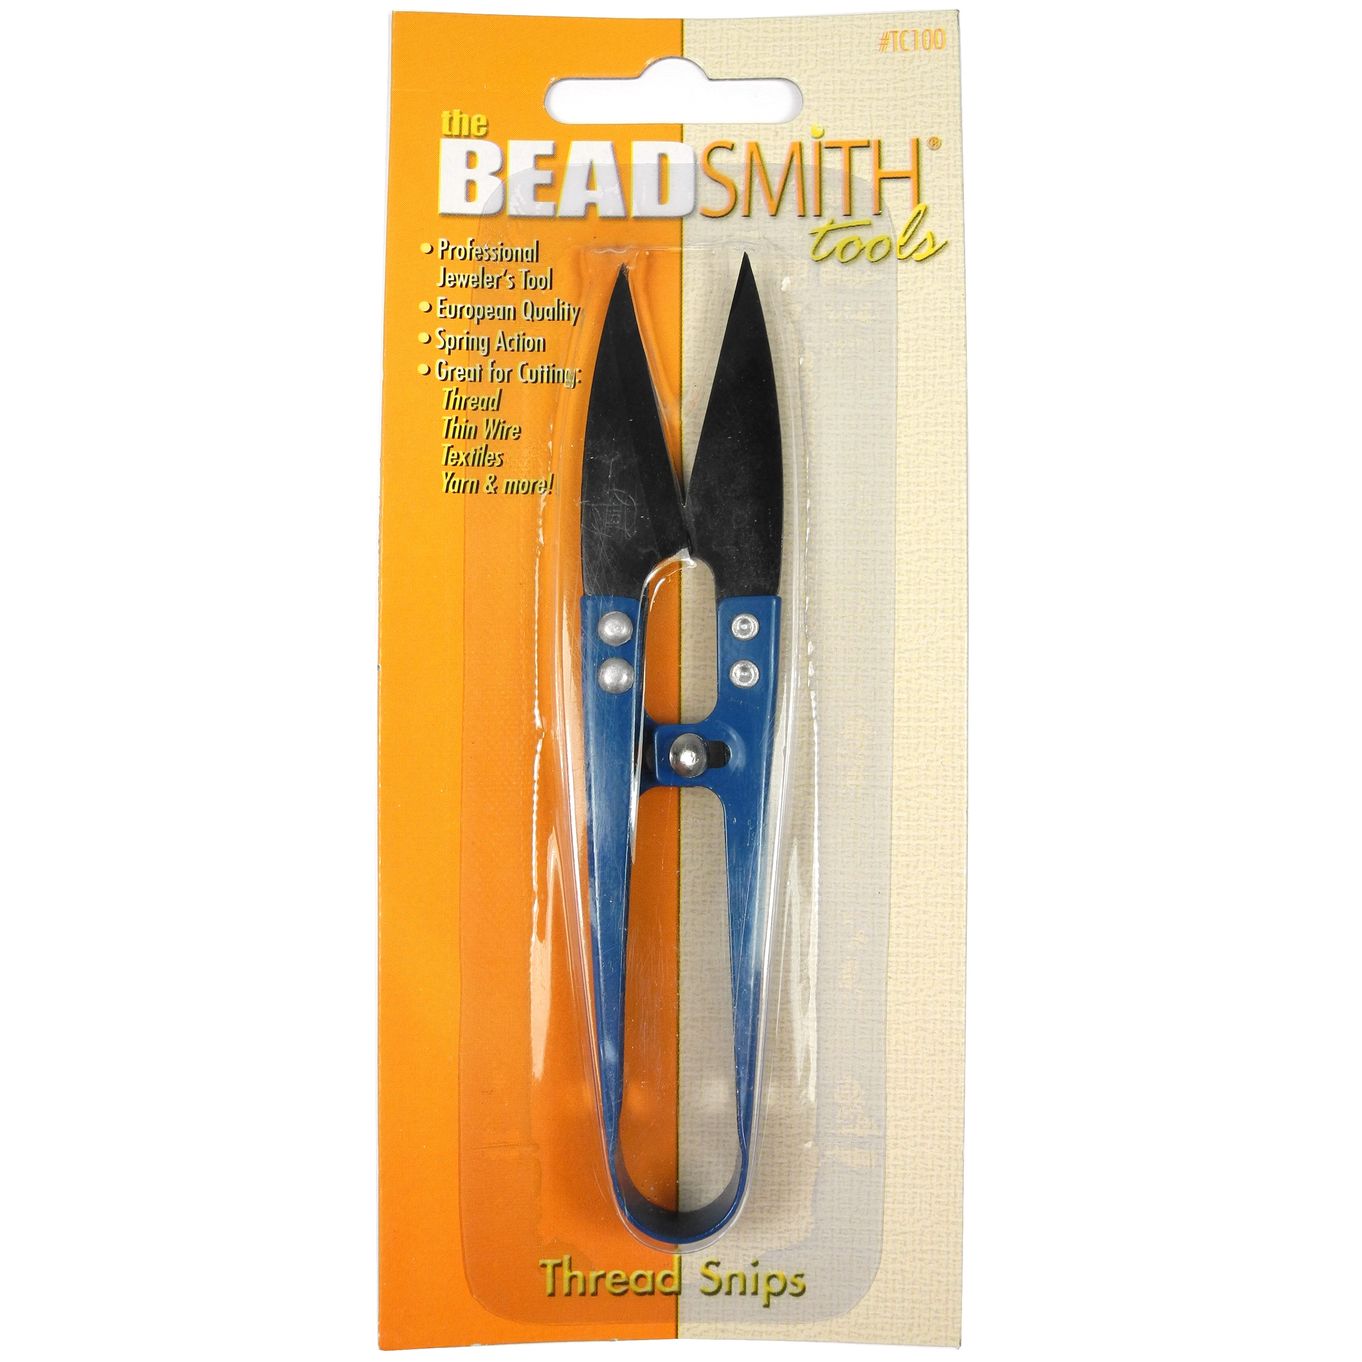 Thread snips / thread scissors, professional heavy-duty by Beadsmith